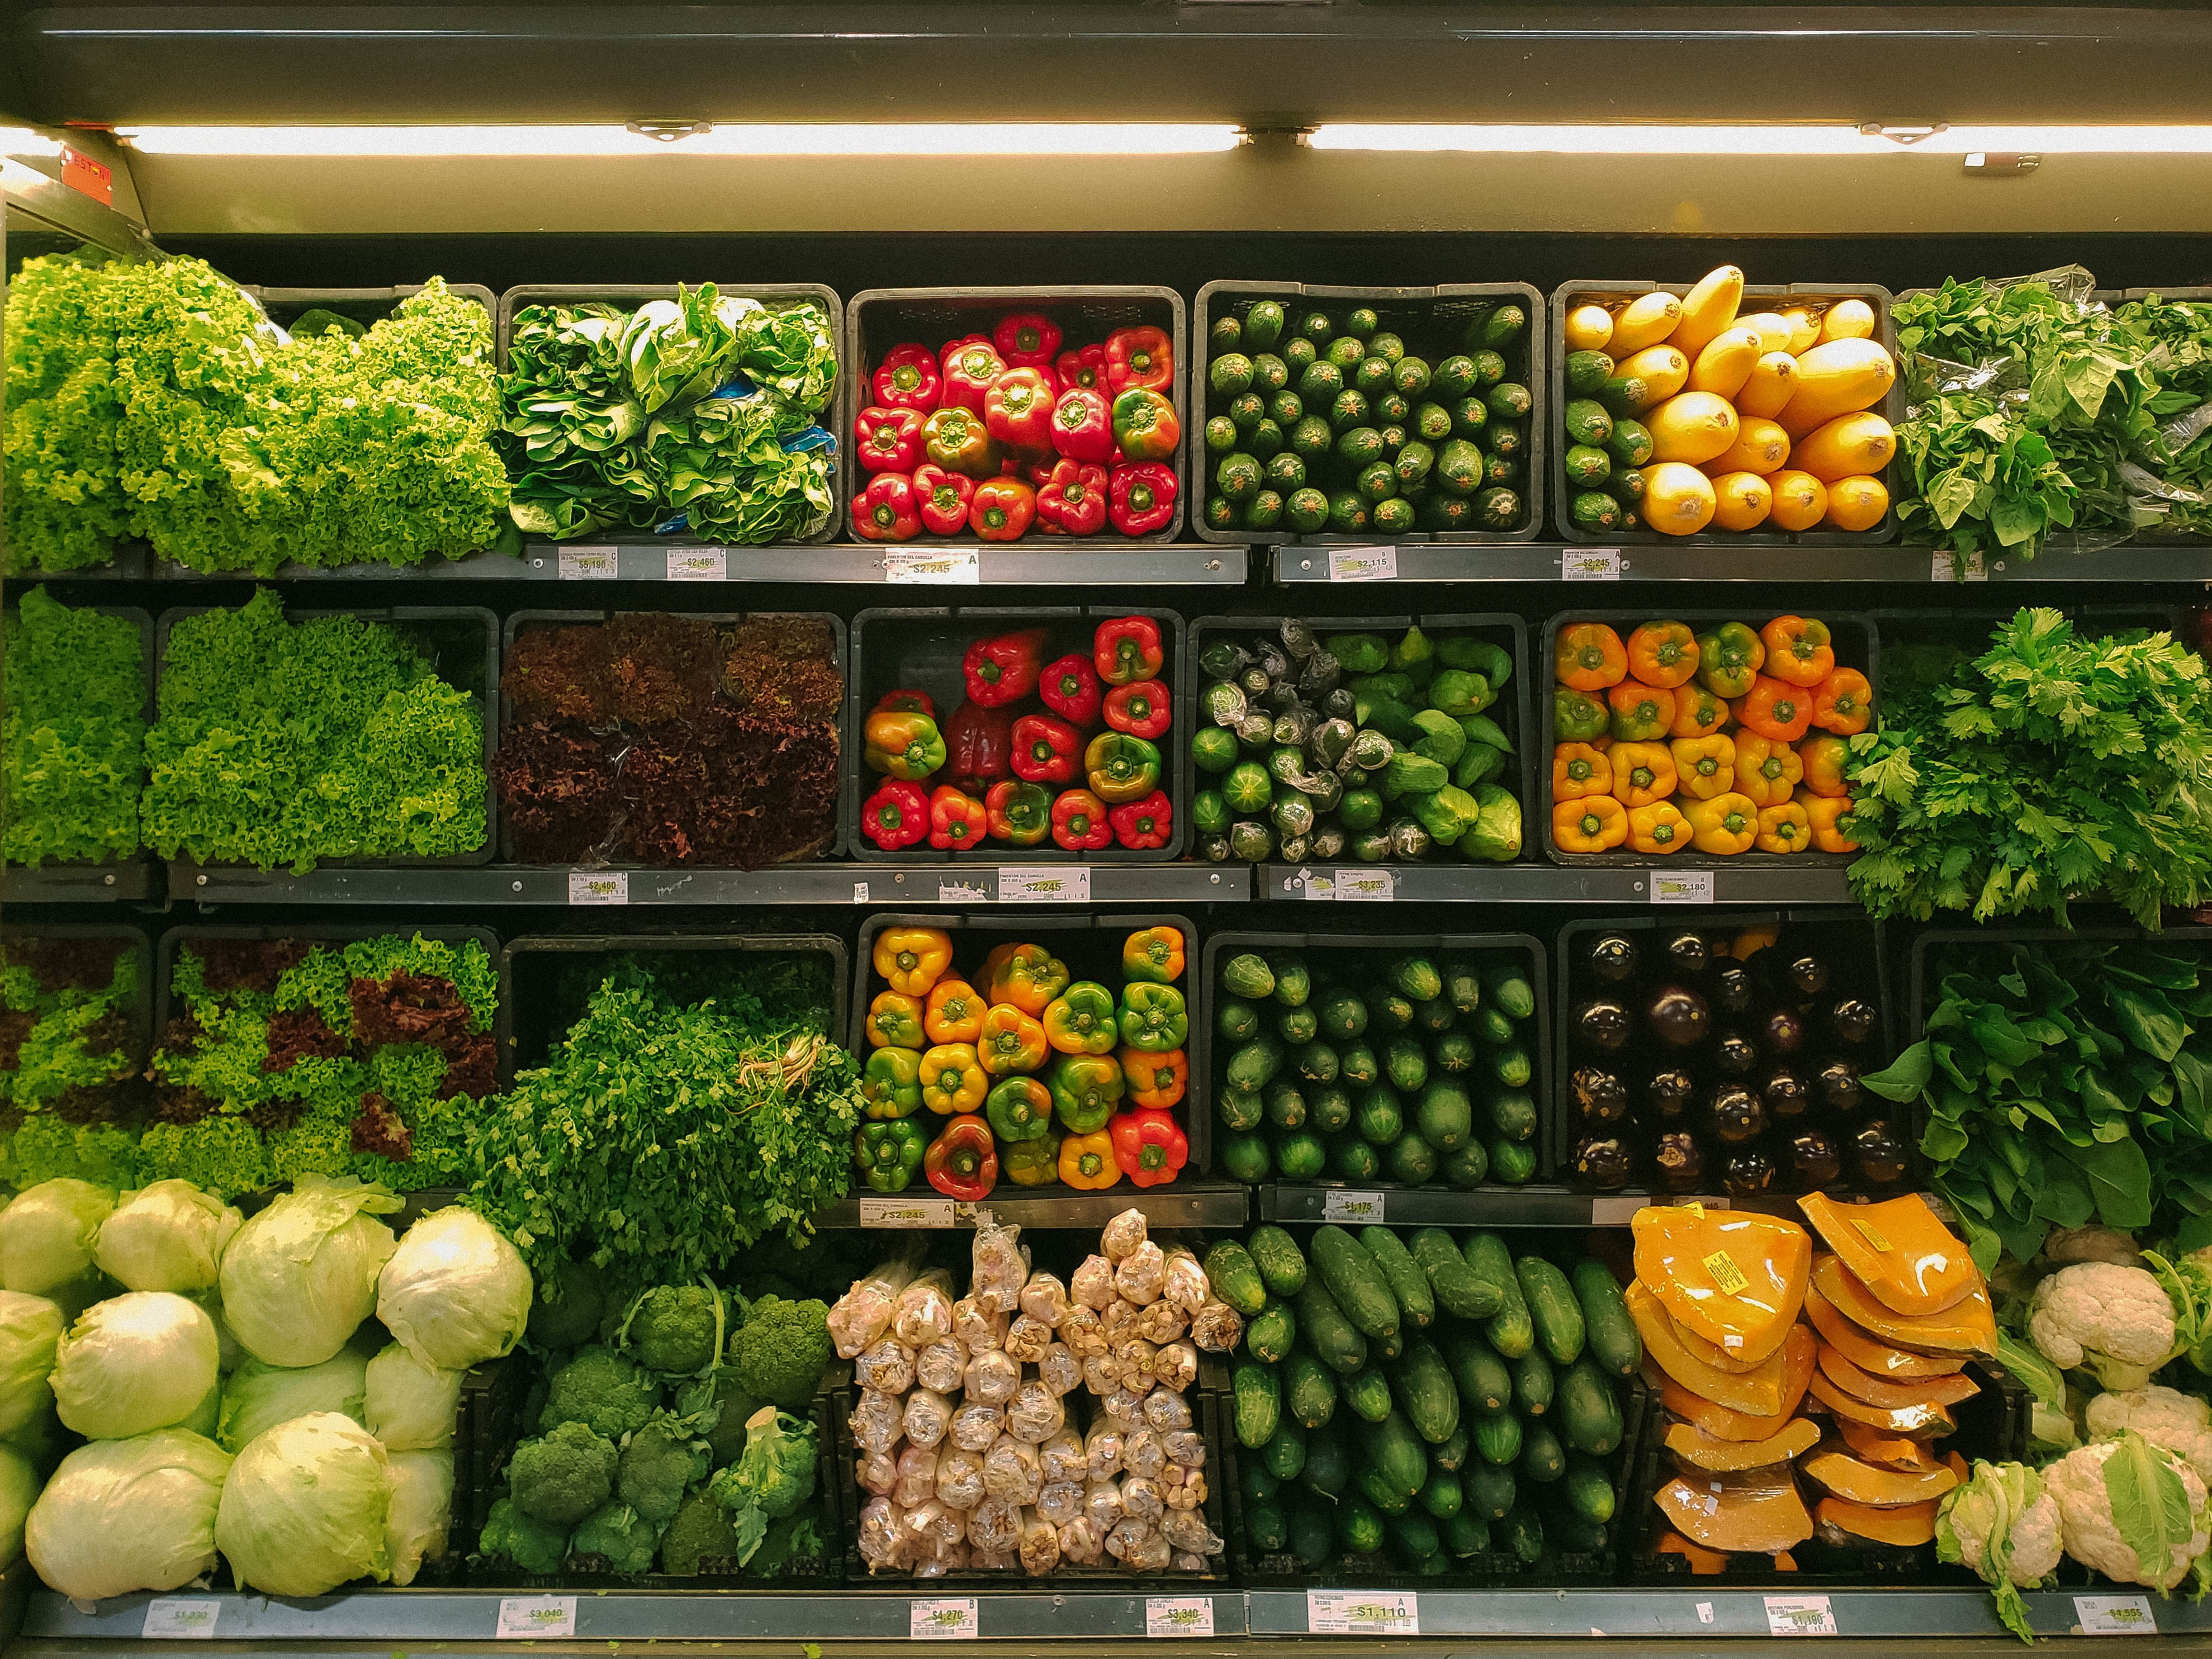 A supermarket display full of vegetables.